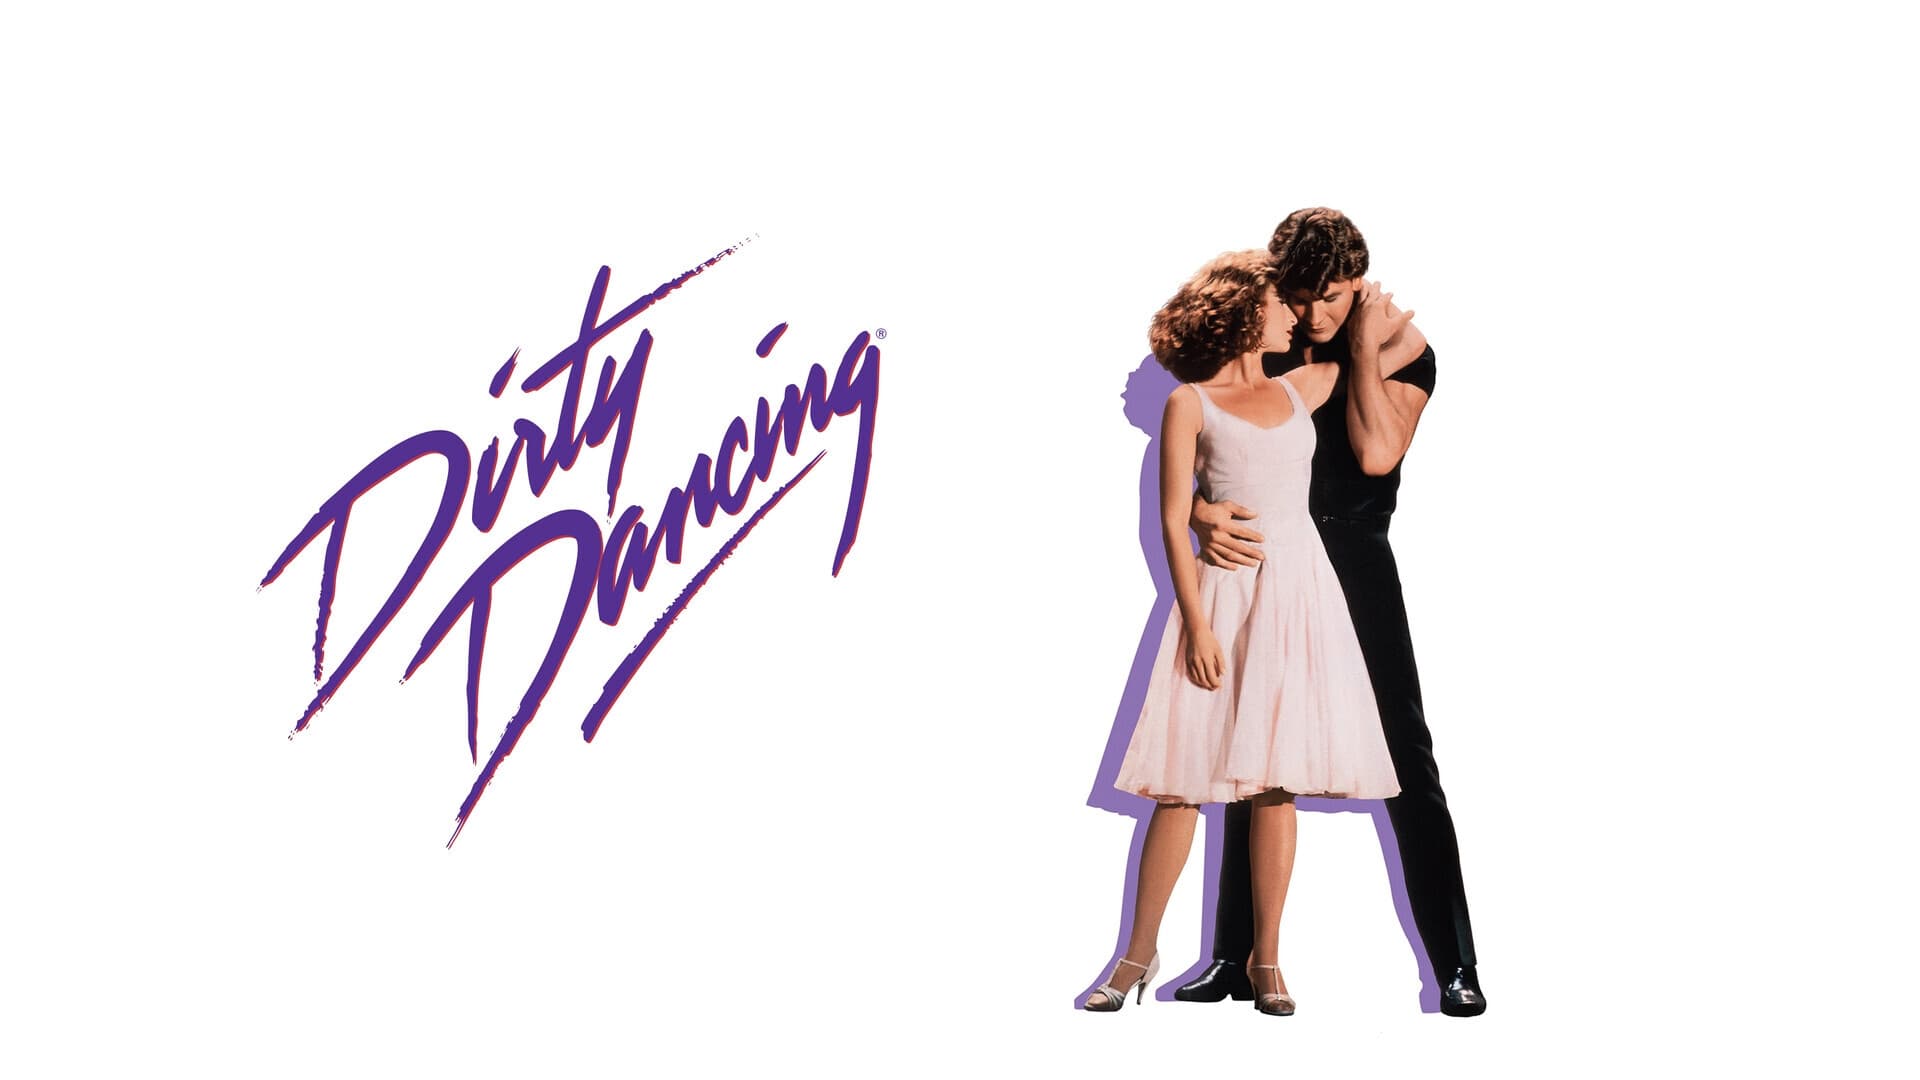 Dirty Dancing - Balli proibiti (1987)